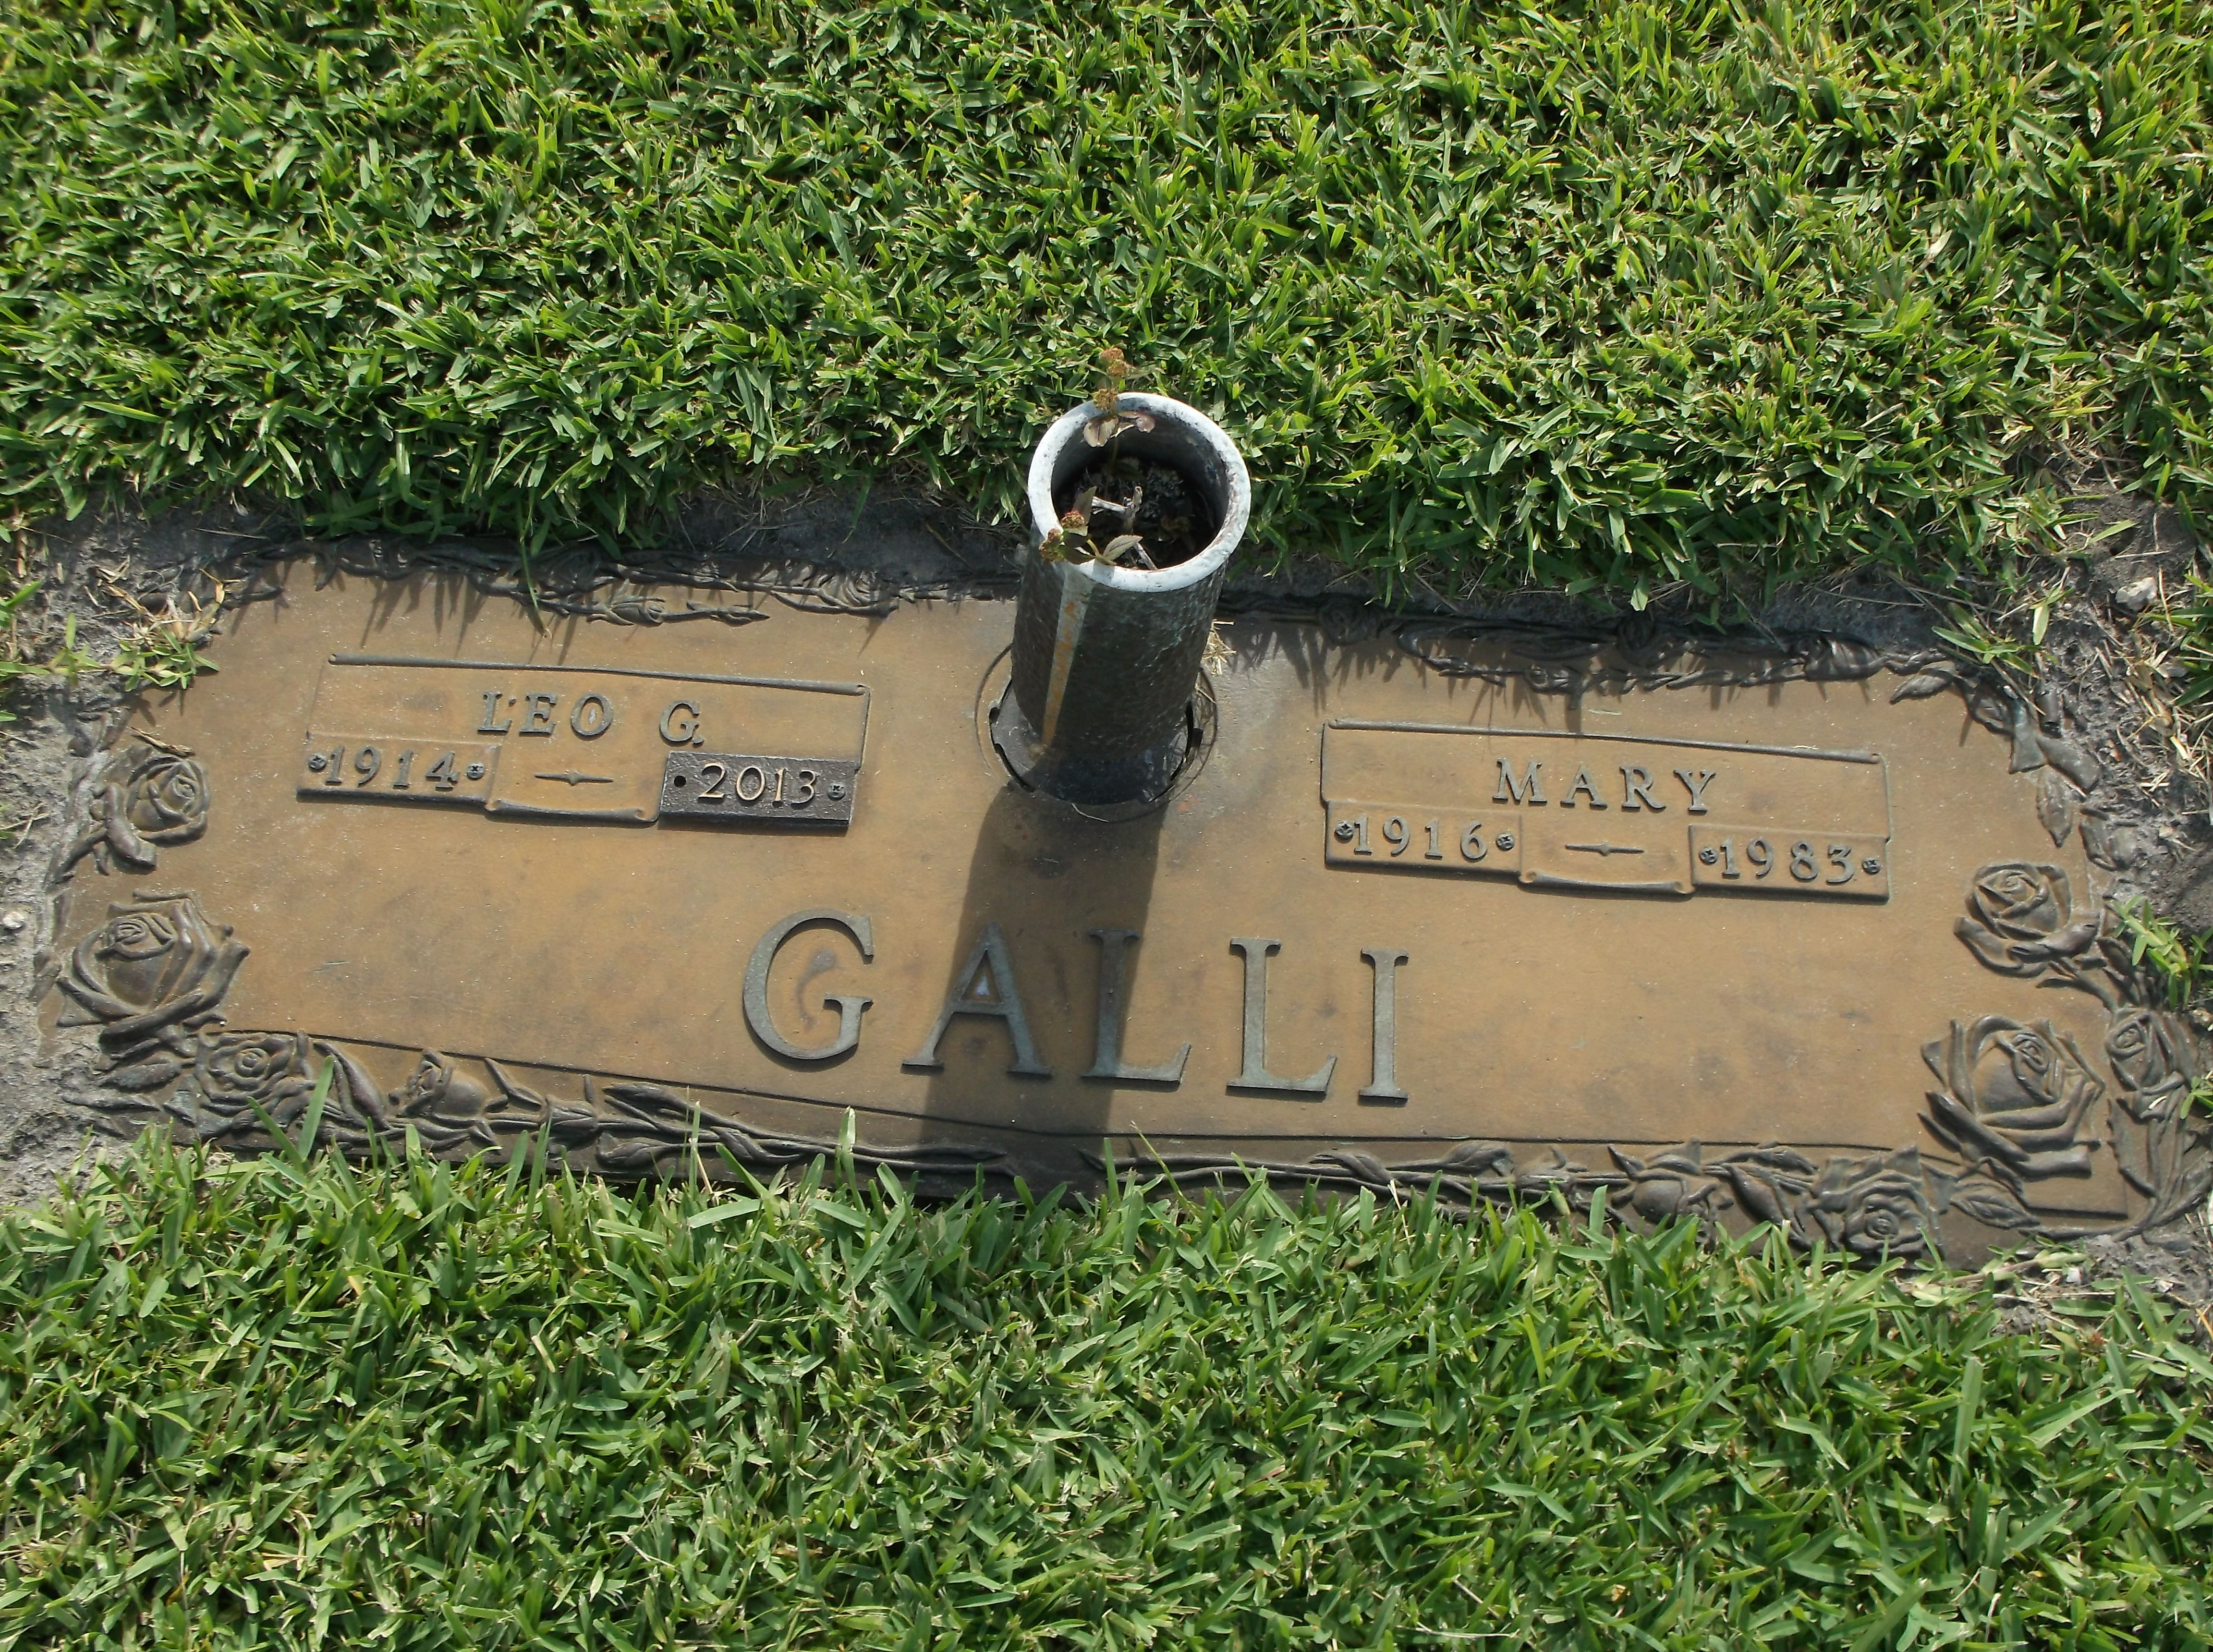 Leo G Galli